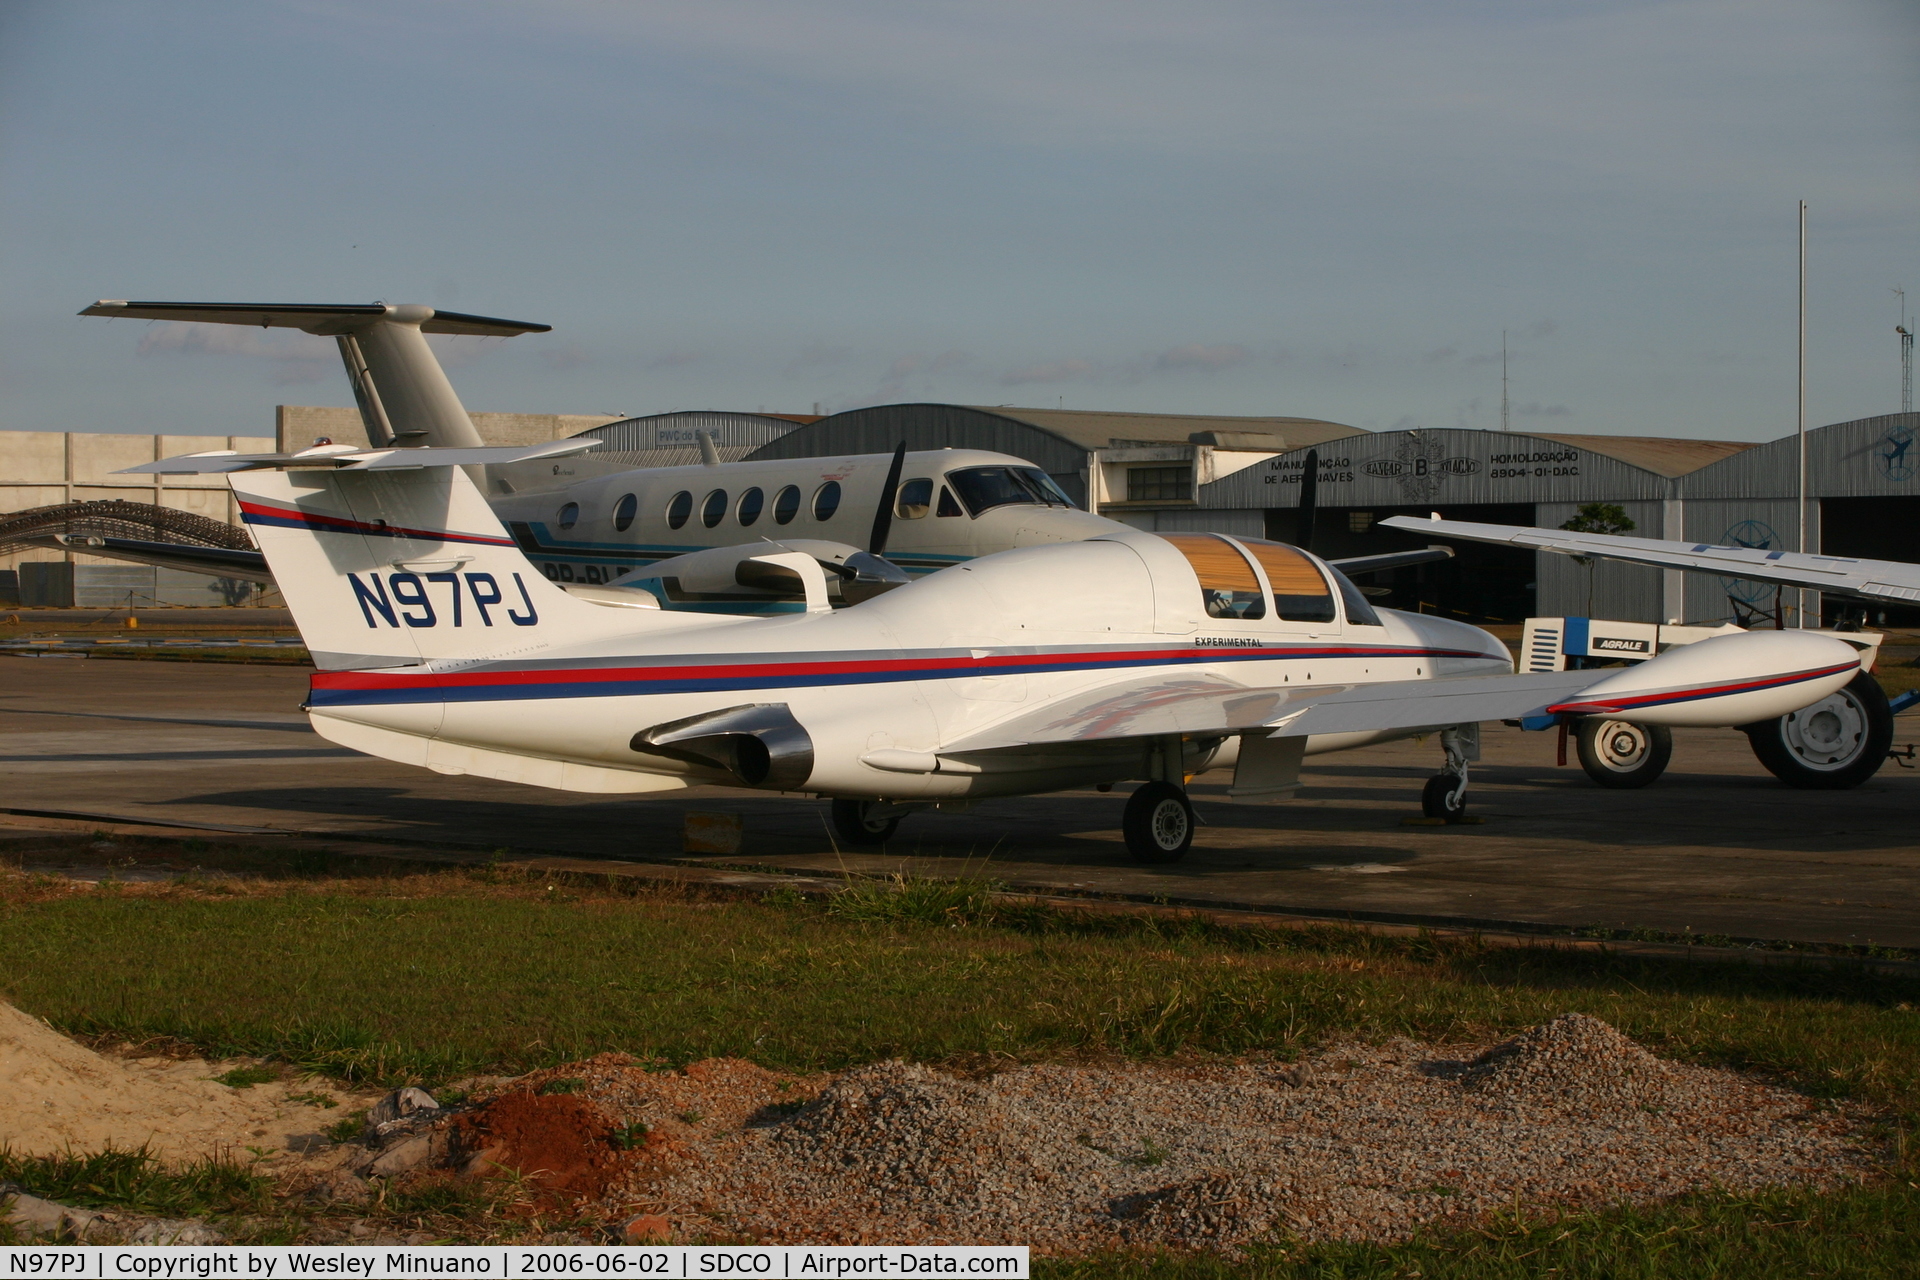 N97PJ, Morane-Saulnier MS.760 Paris C/N 97, Paris jet, now in Brazil